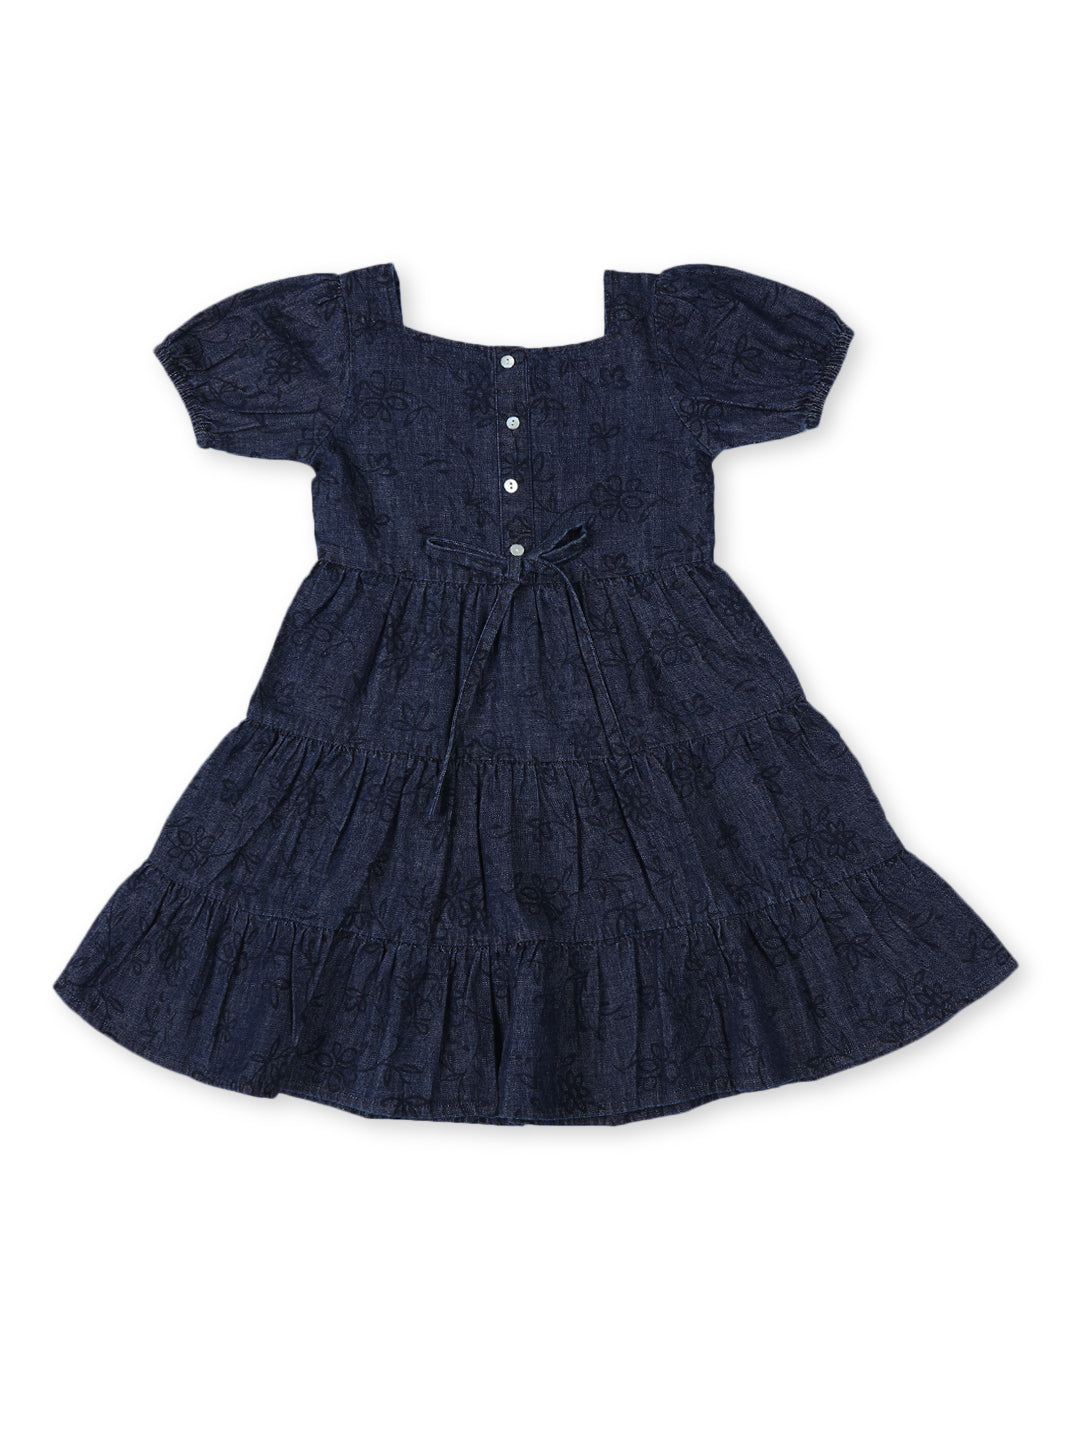 Girls Navy Blue Cotton Denim Printed Dress